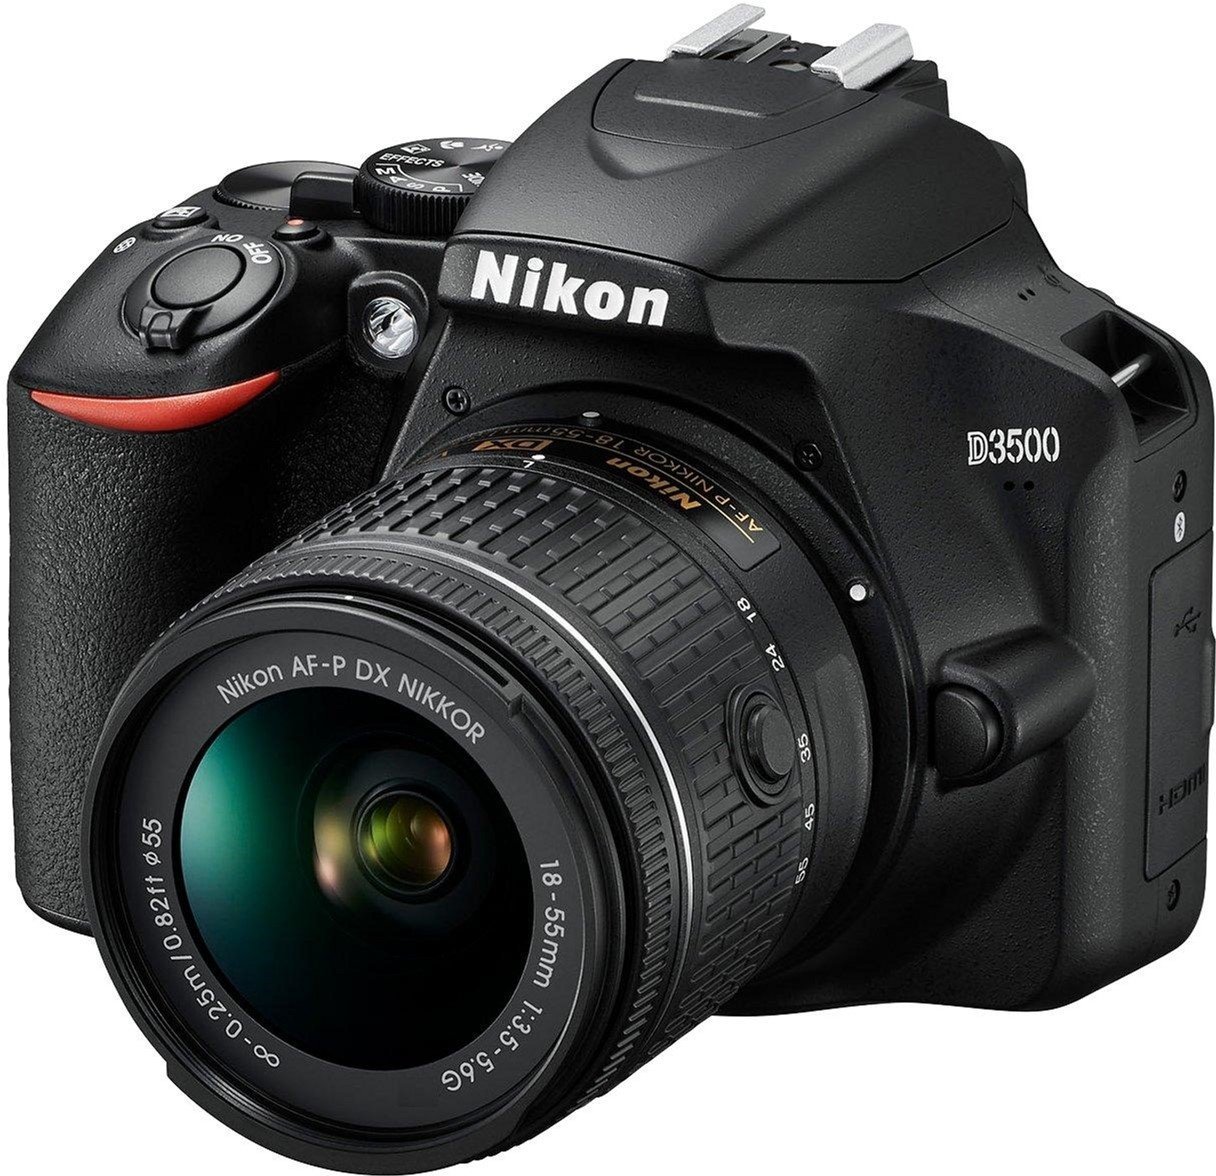 KIT Camera NIKON D3500 / AF-P 18 - 55 mm NON VR / VBA550K002 / Black